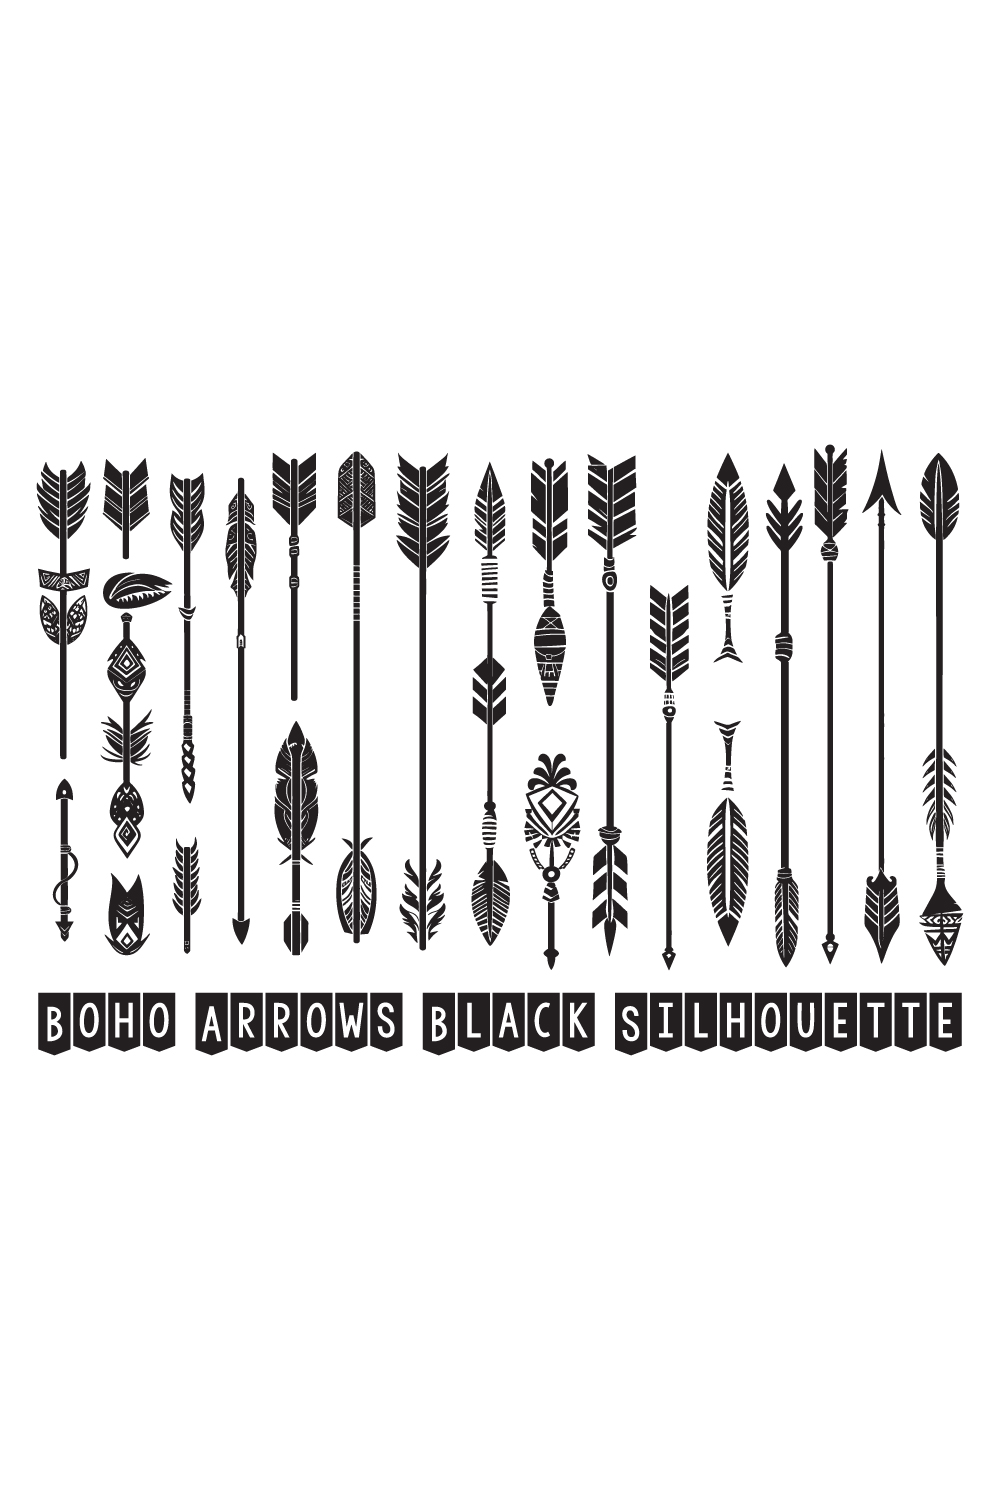 Boho arrows black silhouette, Arrow Feather Moon Illustrations pinterest preview image.